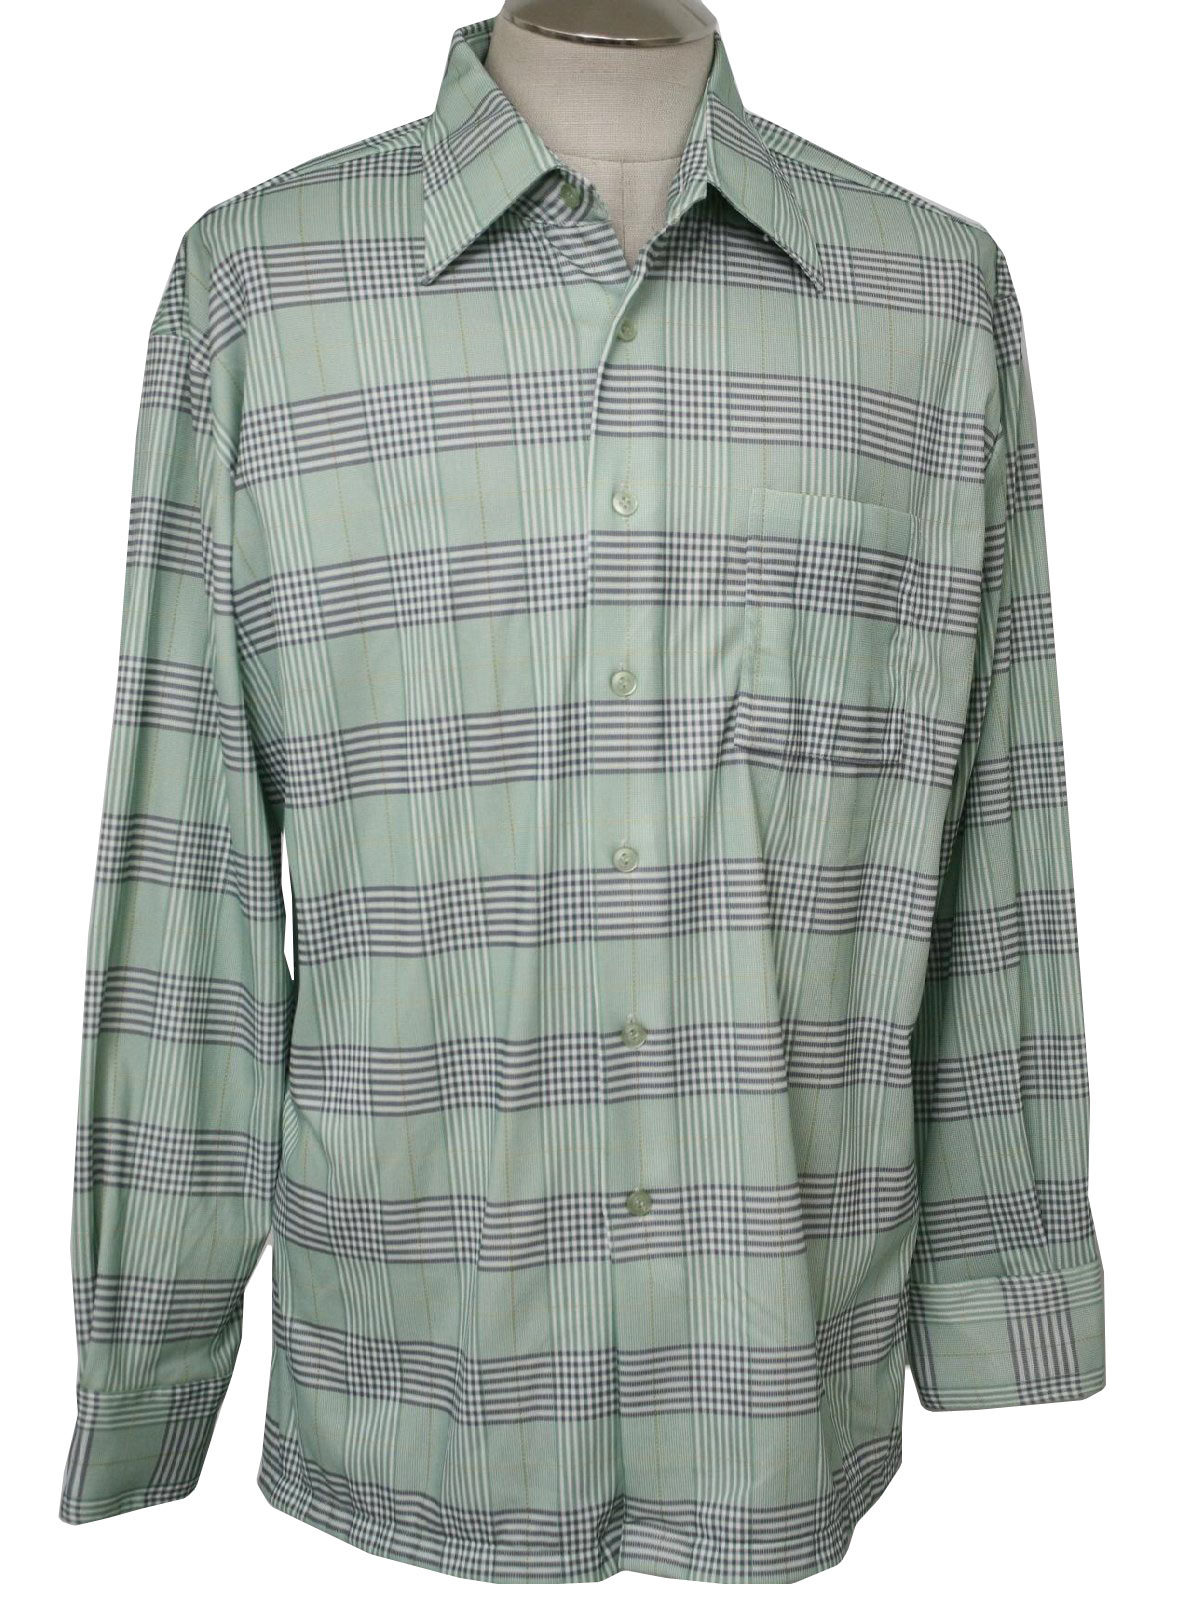 1970's Vintage JC Penney Shirt: 70s -JC Penney- Mens greens, greys ...